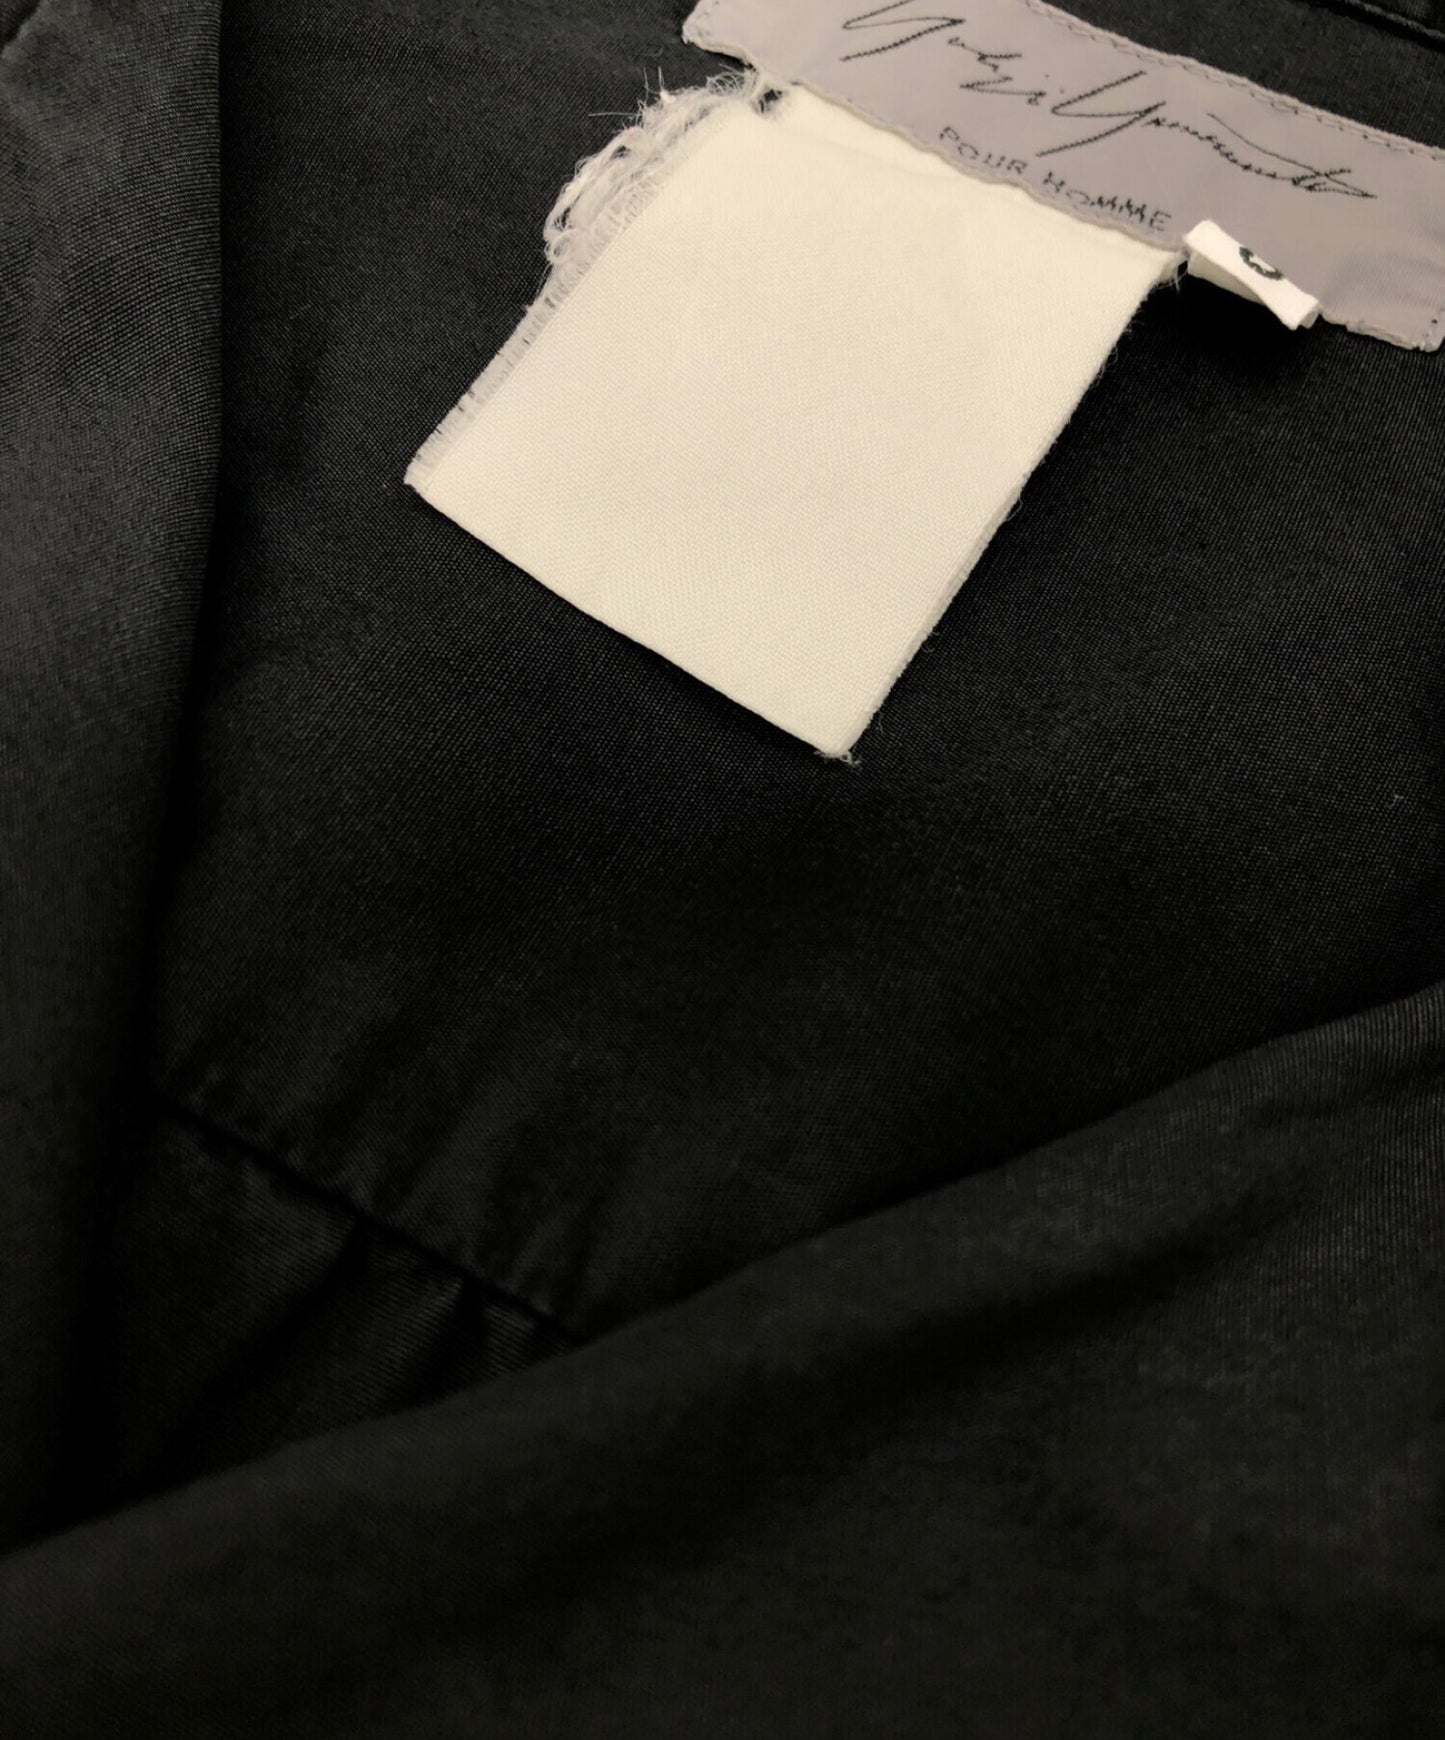 Yohji Yamamoto Pour Homme Double Pocket Broadcloth Open Collar Collar Shirt